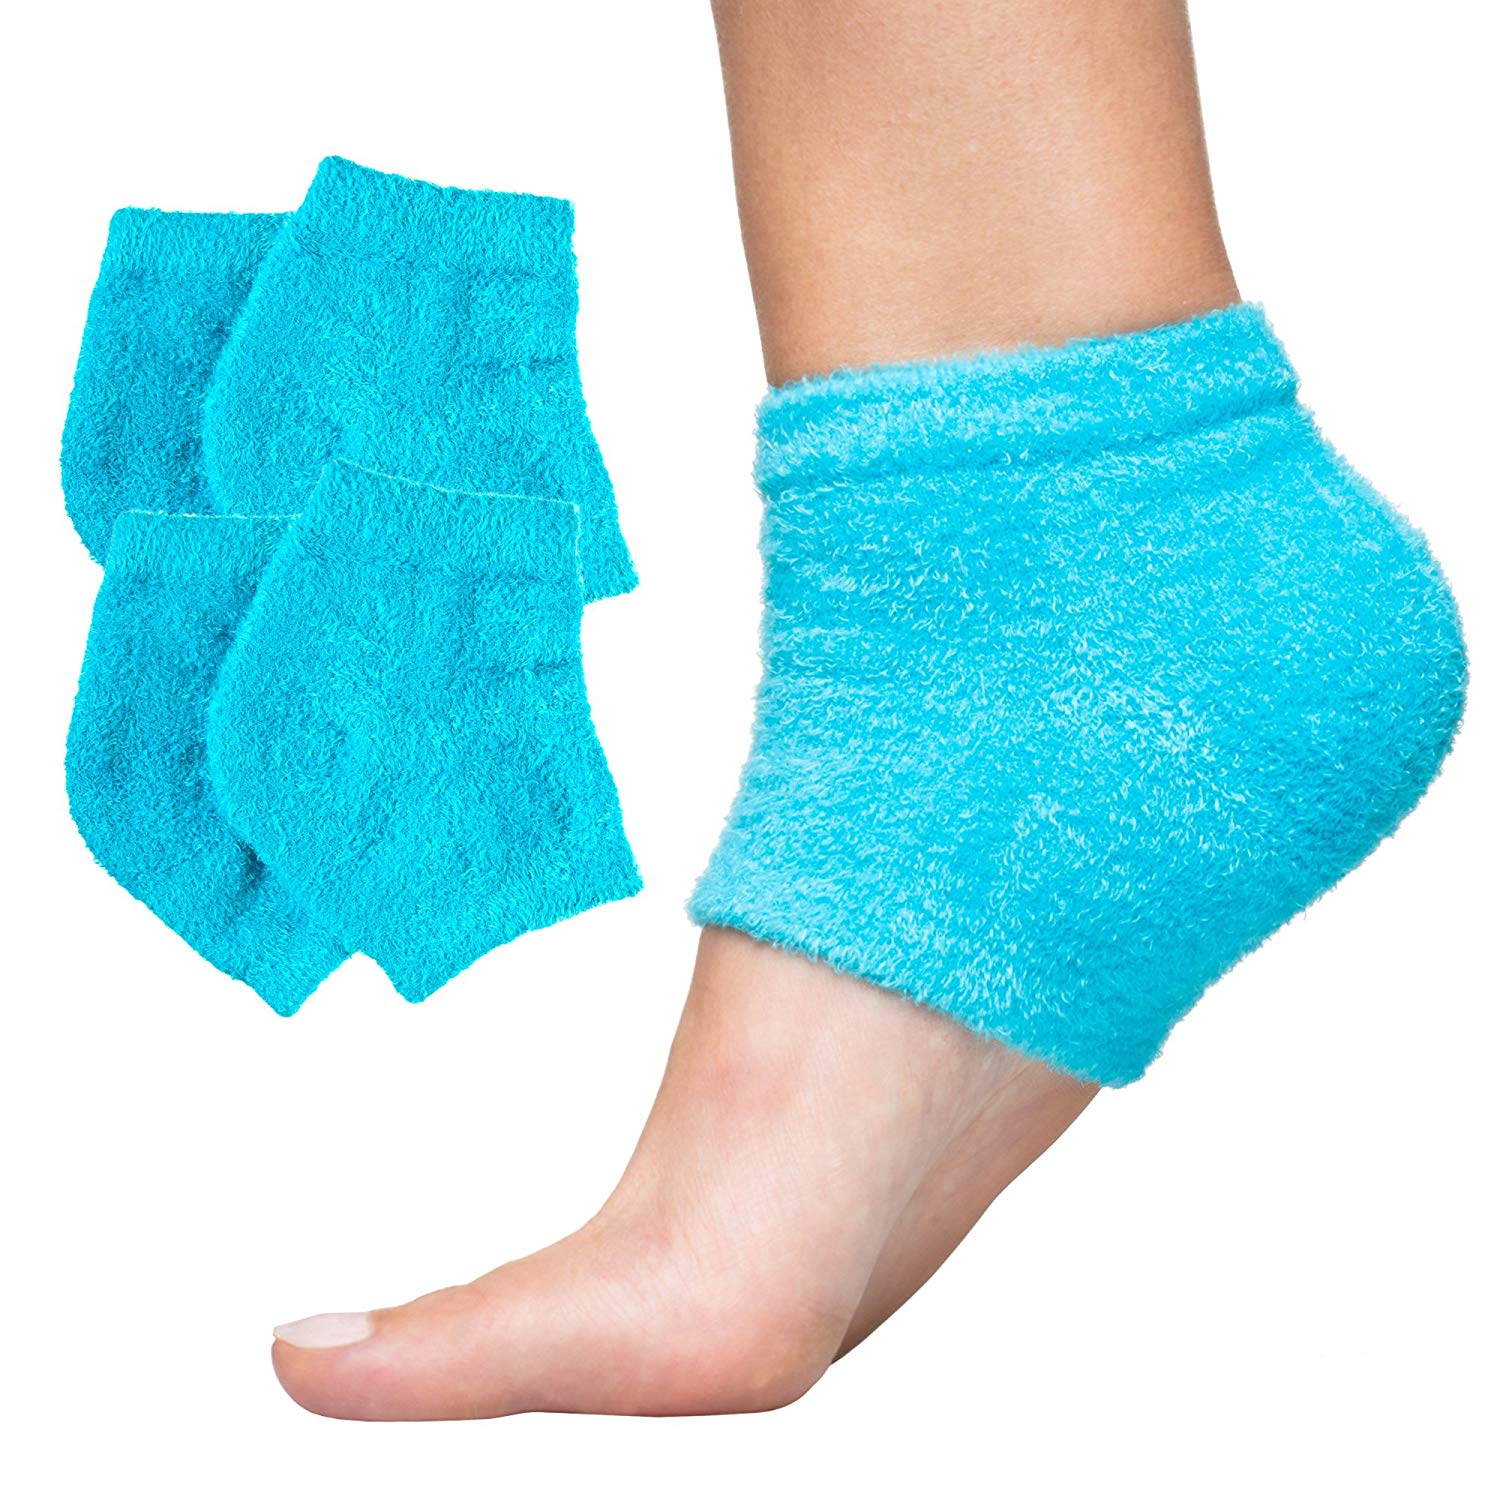 Buy Synxgeli Heel Socks Online at Chemist Warehouse®